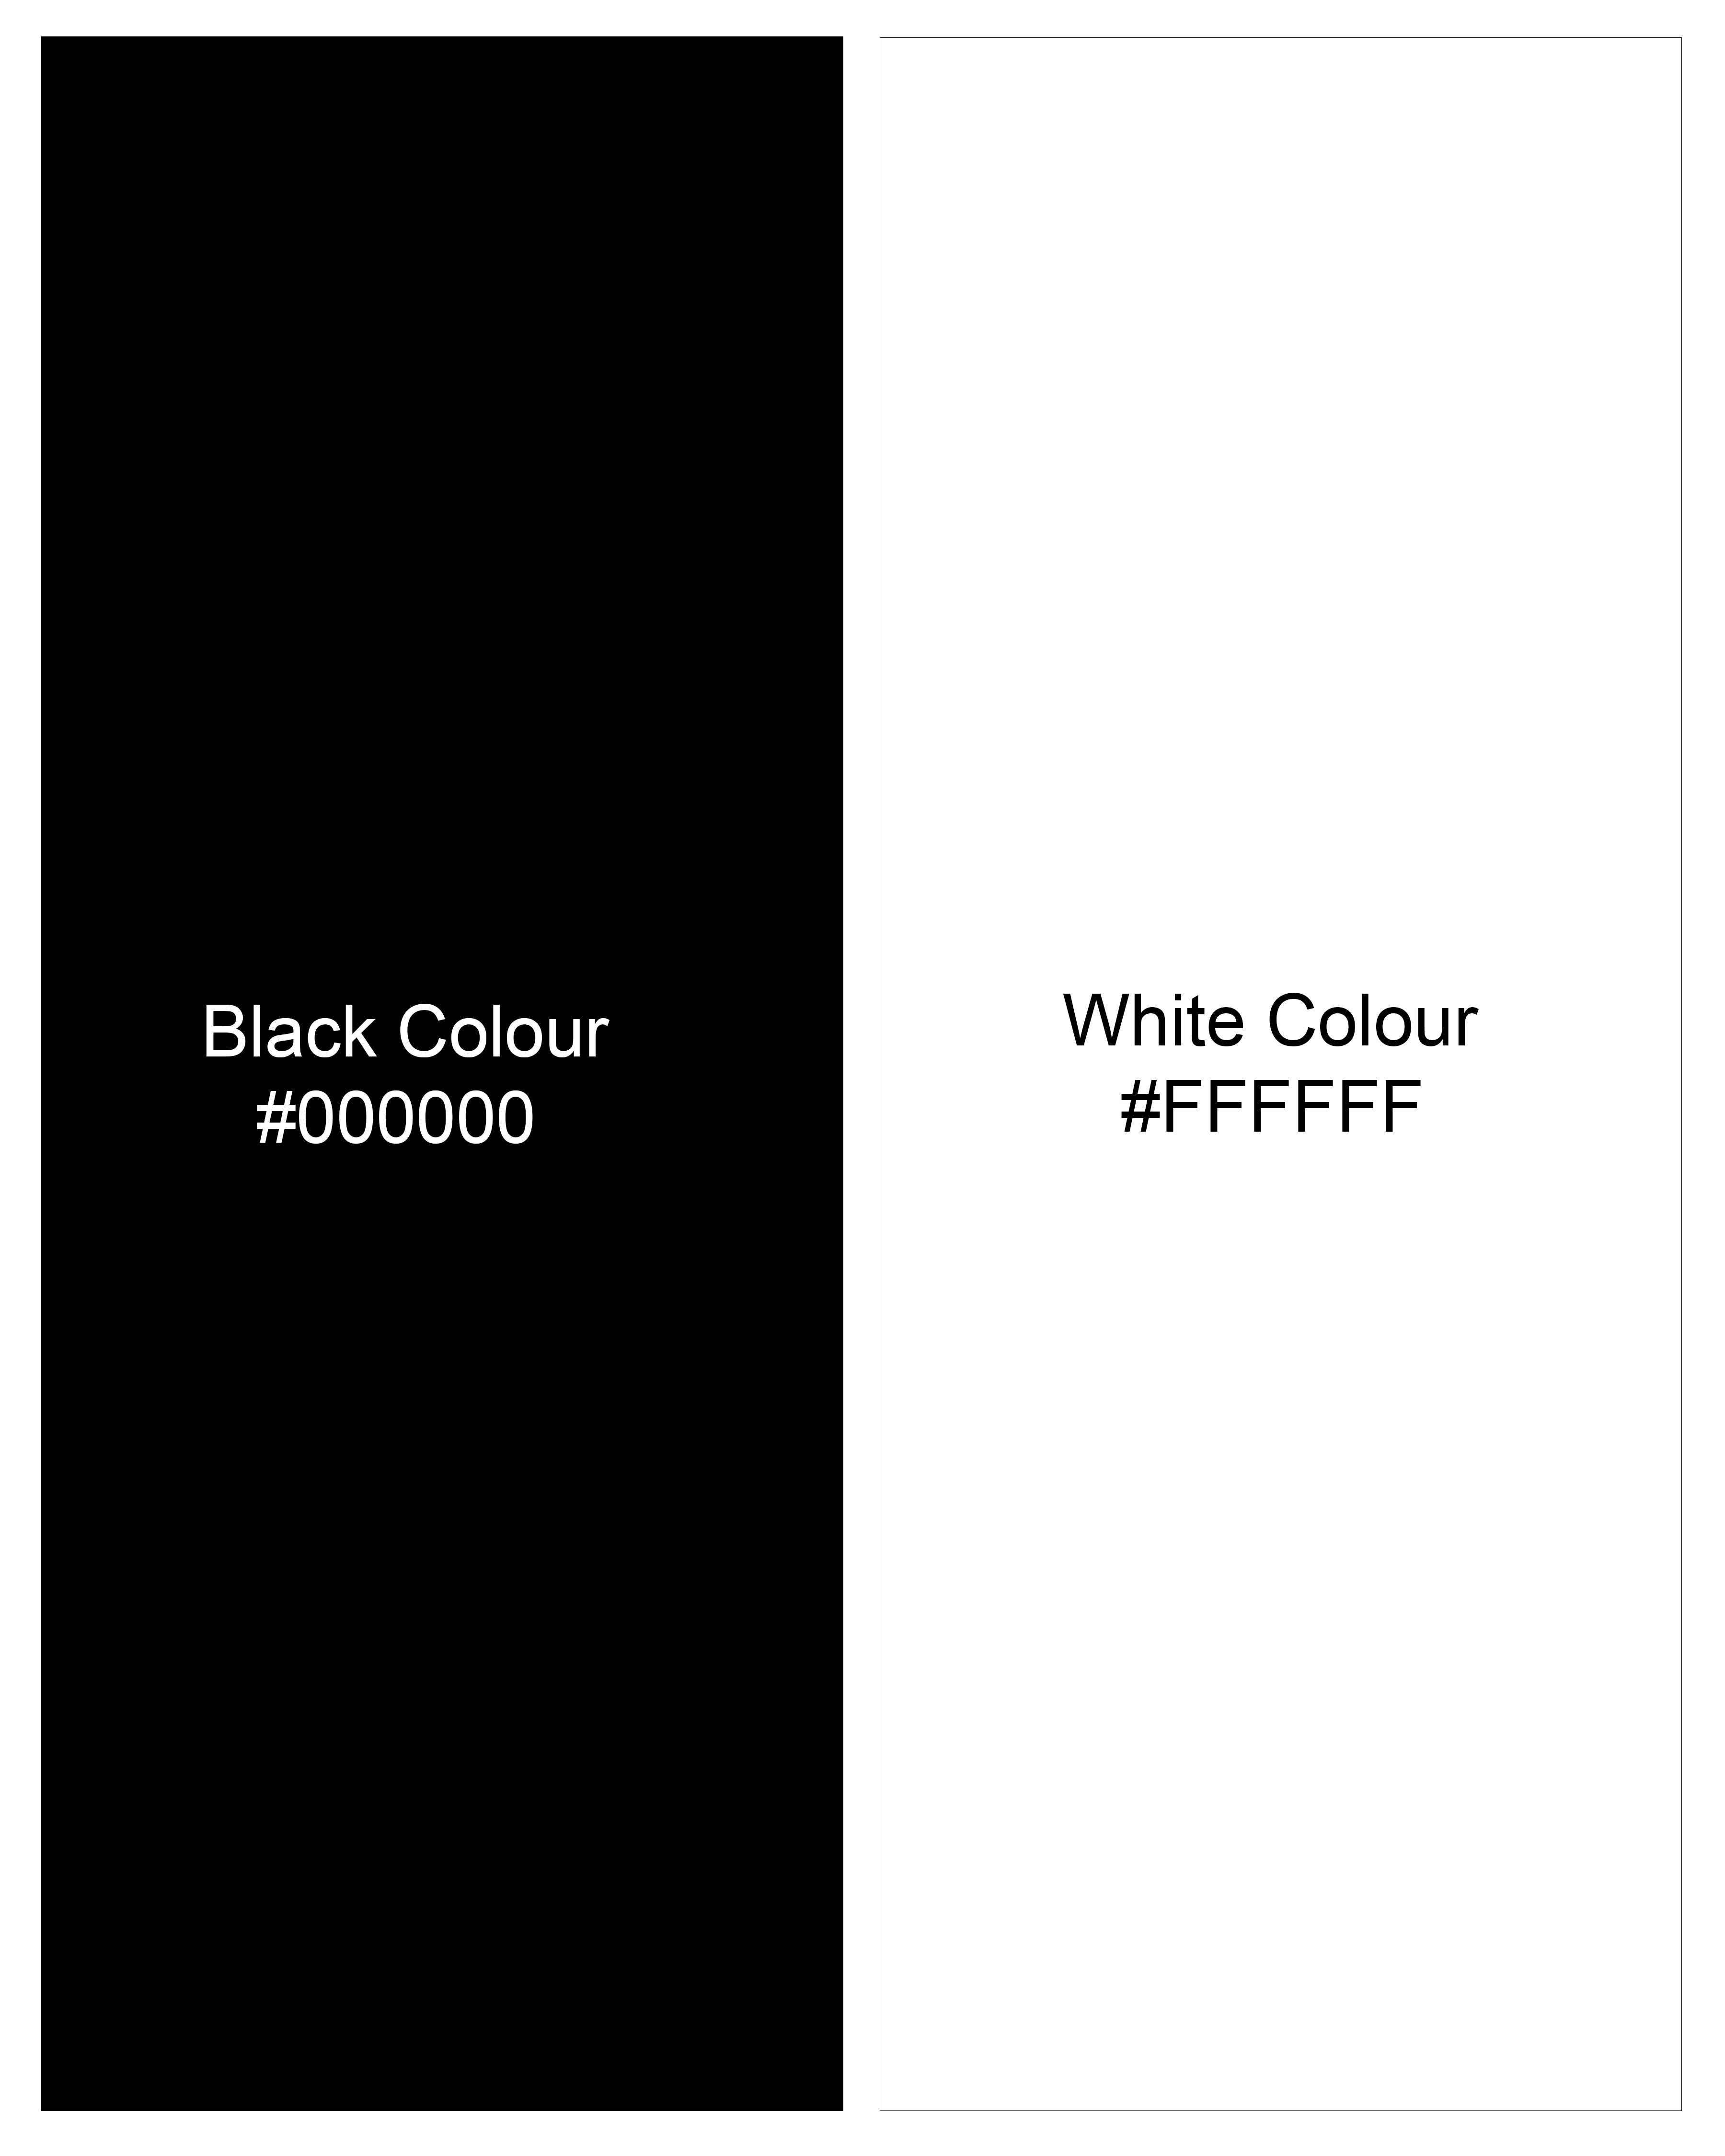 Jade Black with White Patch Work Super Soft Premium Cotton Designer Shirt 9478-WCC-BLK-P380-38, 9478-WCC-BLK-P380-H-38, 9478-WCC-BLK-P380-39, 9478-WCC-BLK-P380-H-39, 9478-WCC-BLK-P380-40, 9478-WCC-BLK-P380-H-40, 9478-WCC-BLK-P380-42, 9478-WCC-BLK-P380-H-42, 9478-WCC-BLK-P380-44, 9478-WCC-BLK-P380-H-44, 9478-WCC-BLK-P380-46, 9478-WCC-BLK-P380-H-46, 9478-WCC-BLK-P380-48, 9478-WCC-BLK-P380-H-48, 9478-WCC-BLK-P380-50, 9478-WCC-BLK-P380-H-50, 9478-WCC-BLK-P380-52, 9478-WCC-BLK-P380-H-52